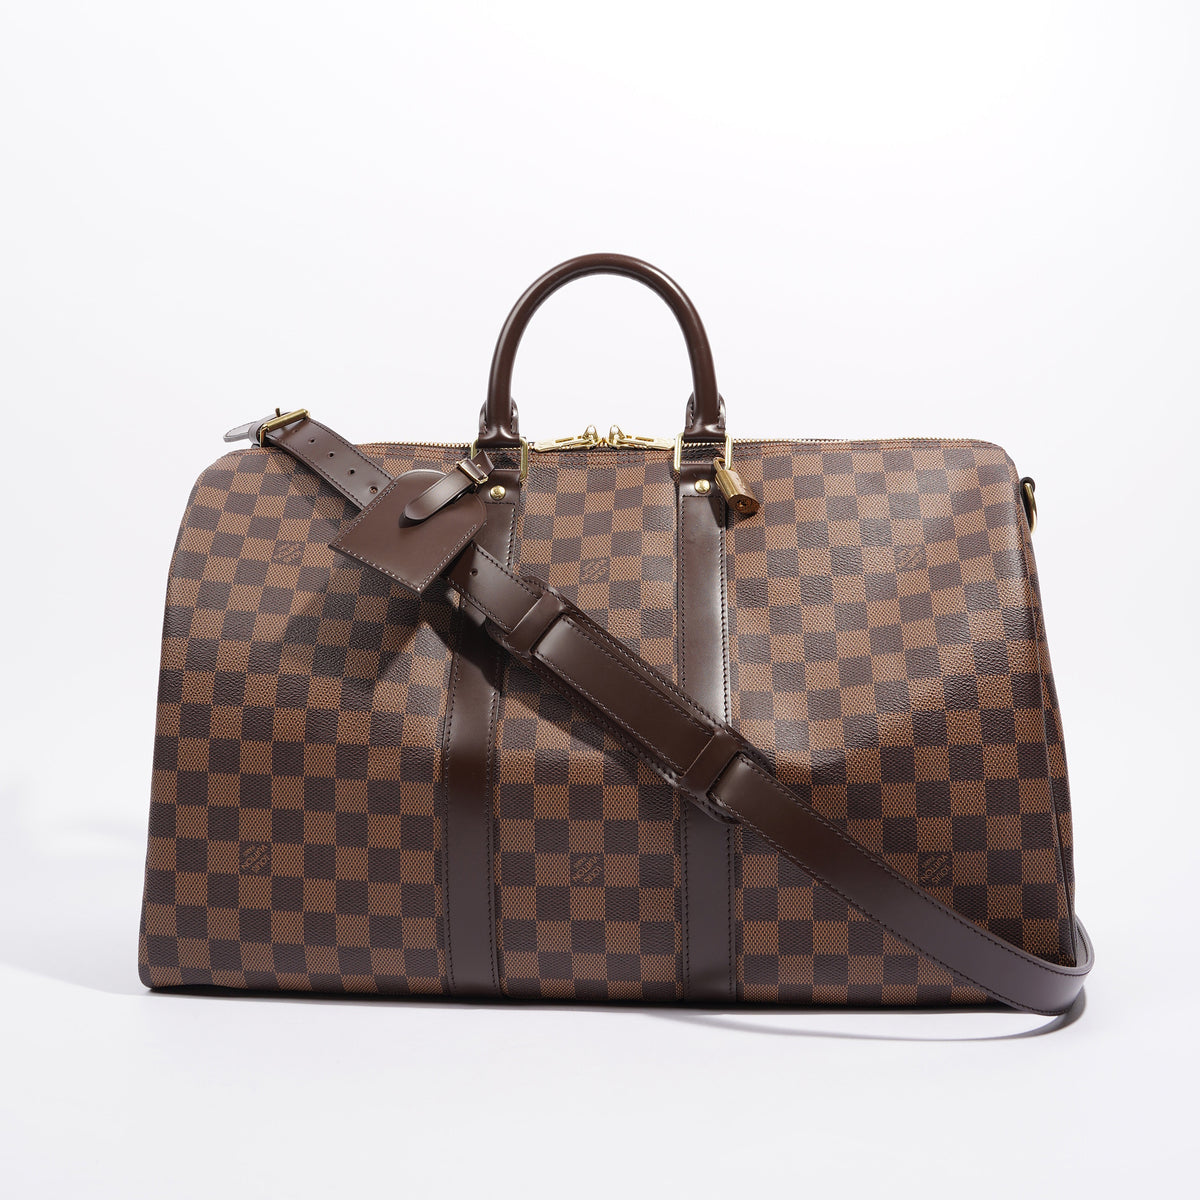 Louis Vuitton Handbag, Wight Damier Ebene Black, never used, with tags